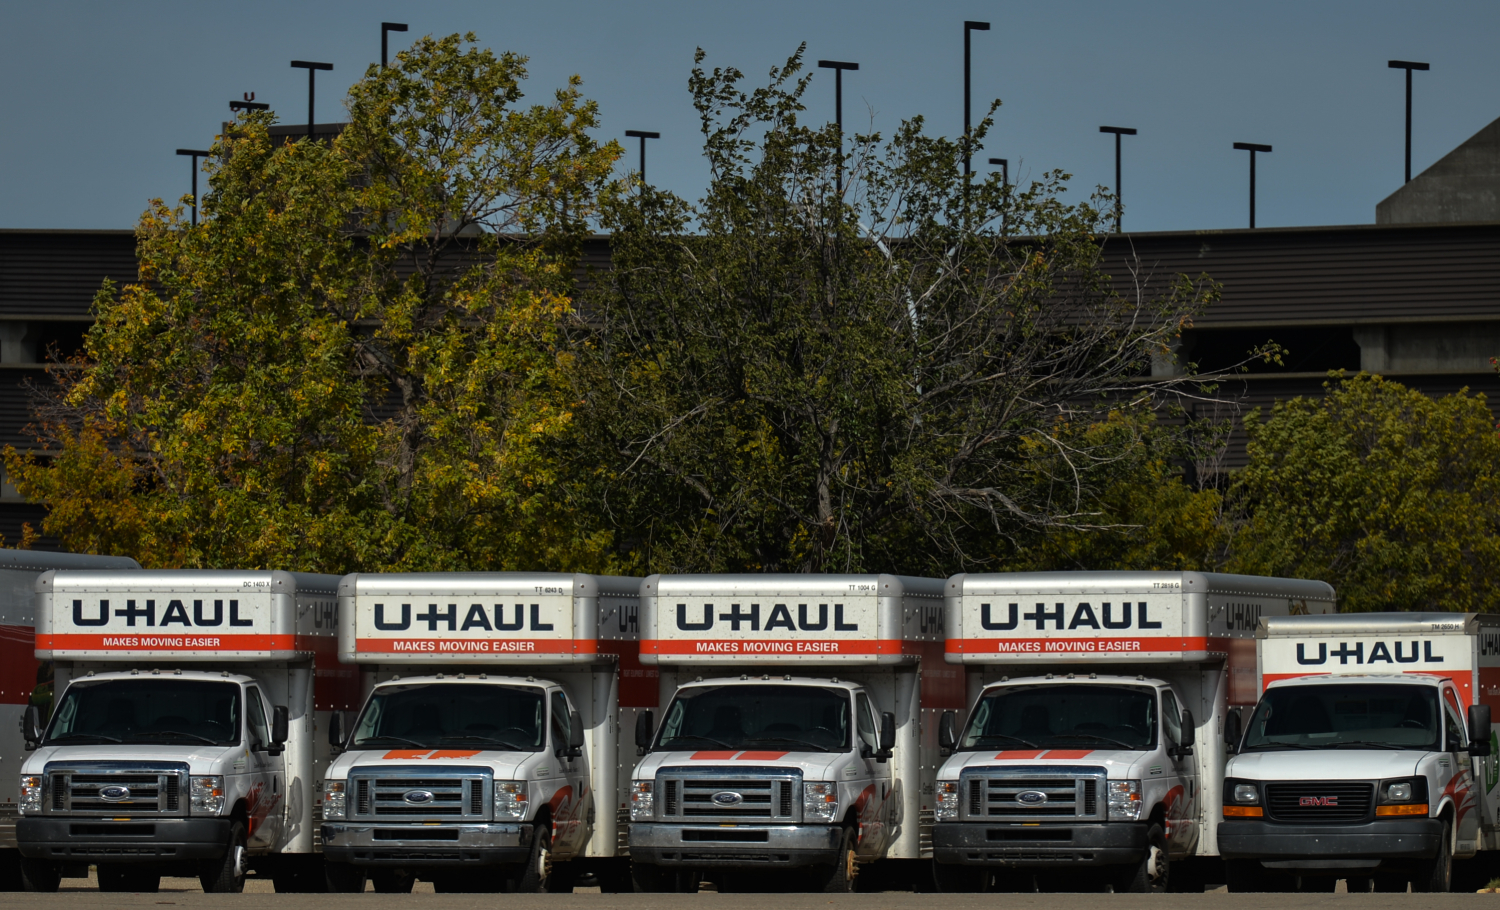 U-Haul ran out of trucks